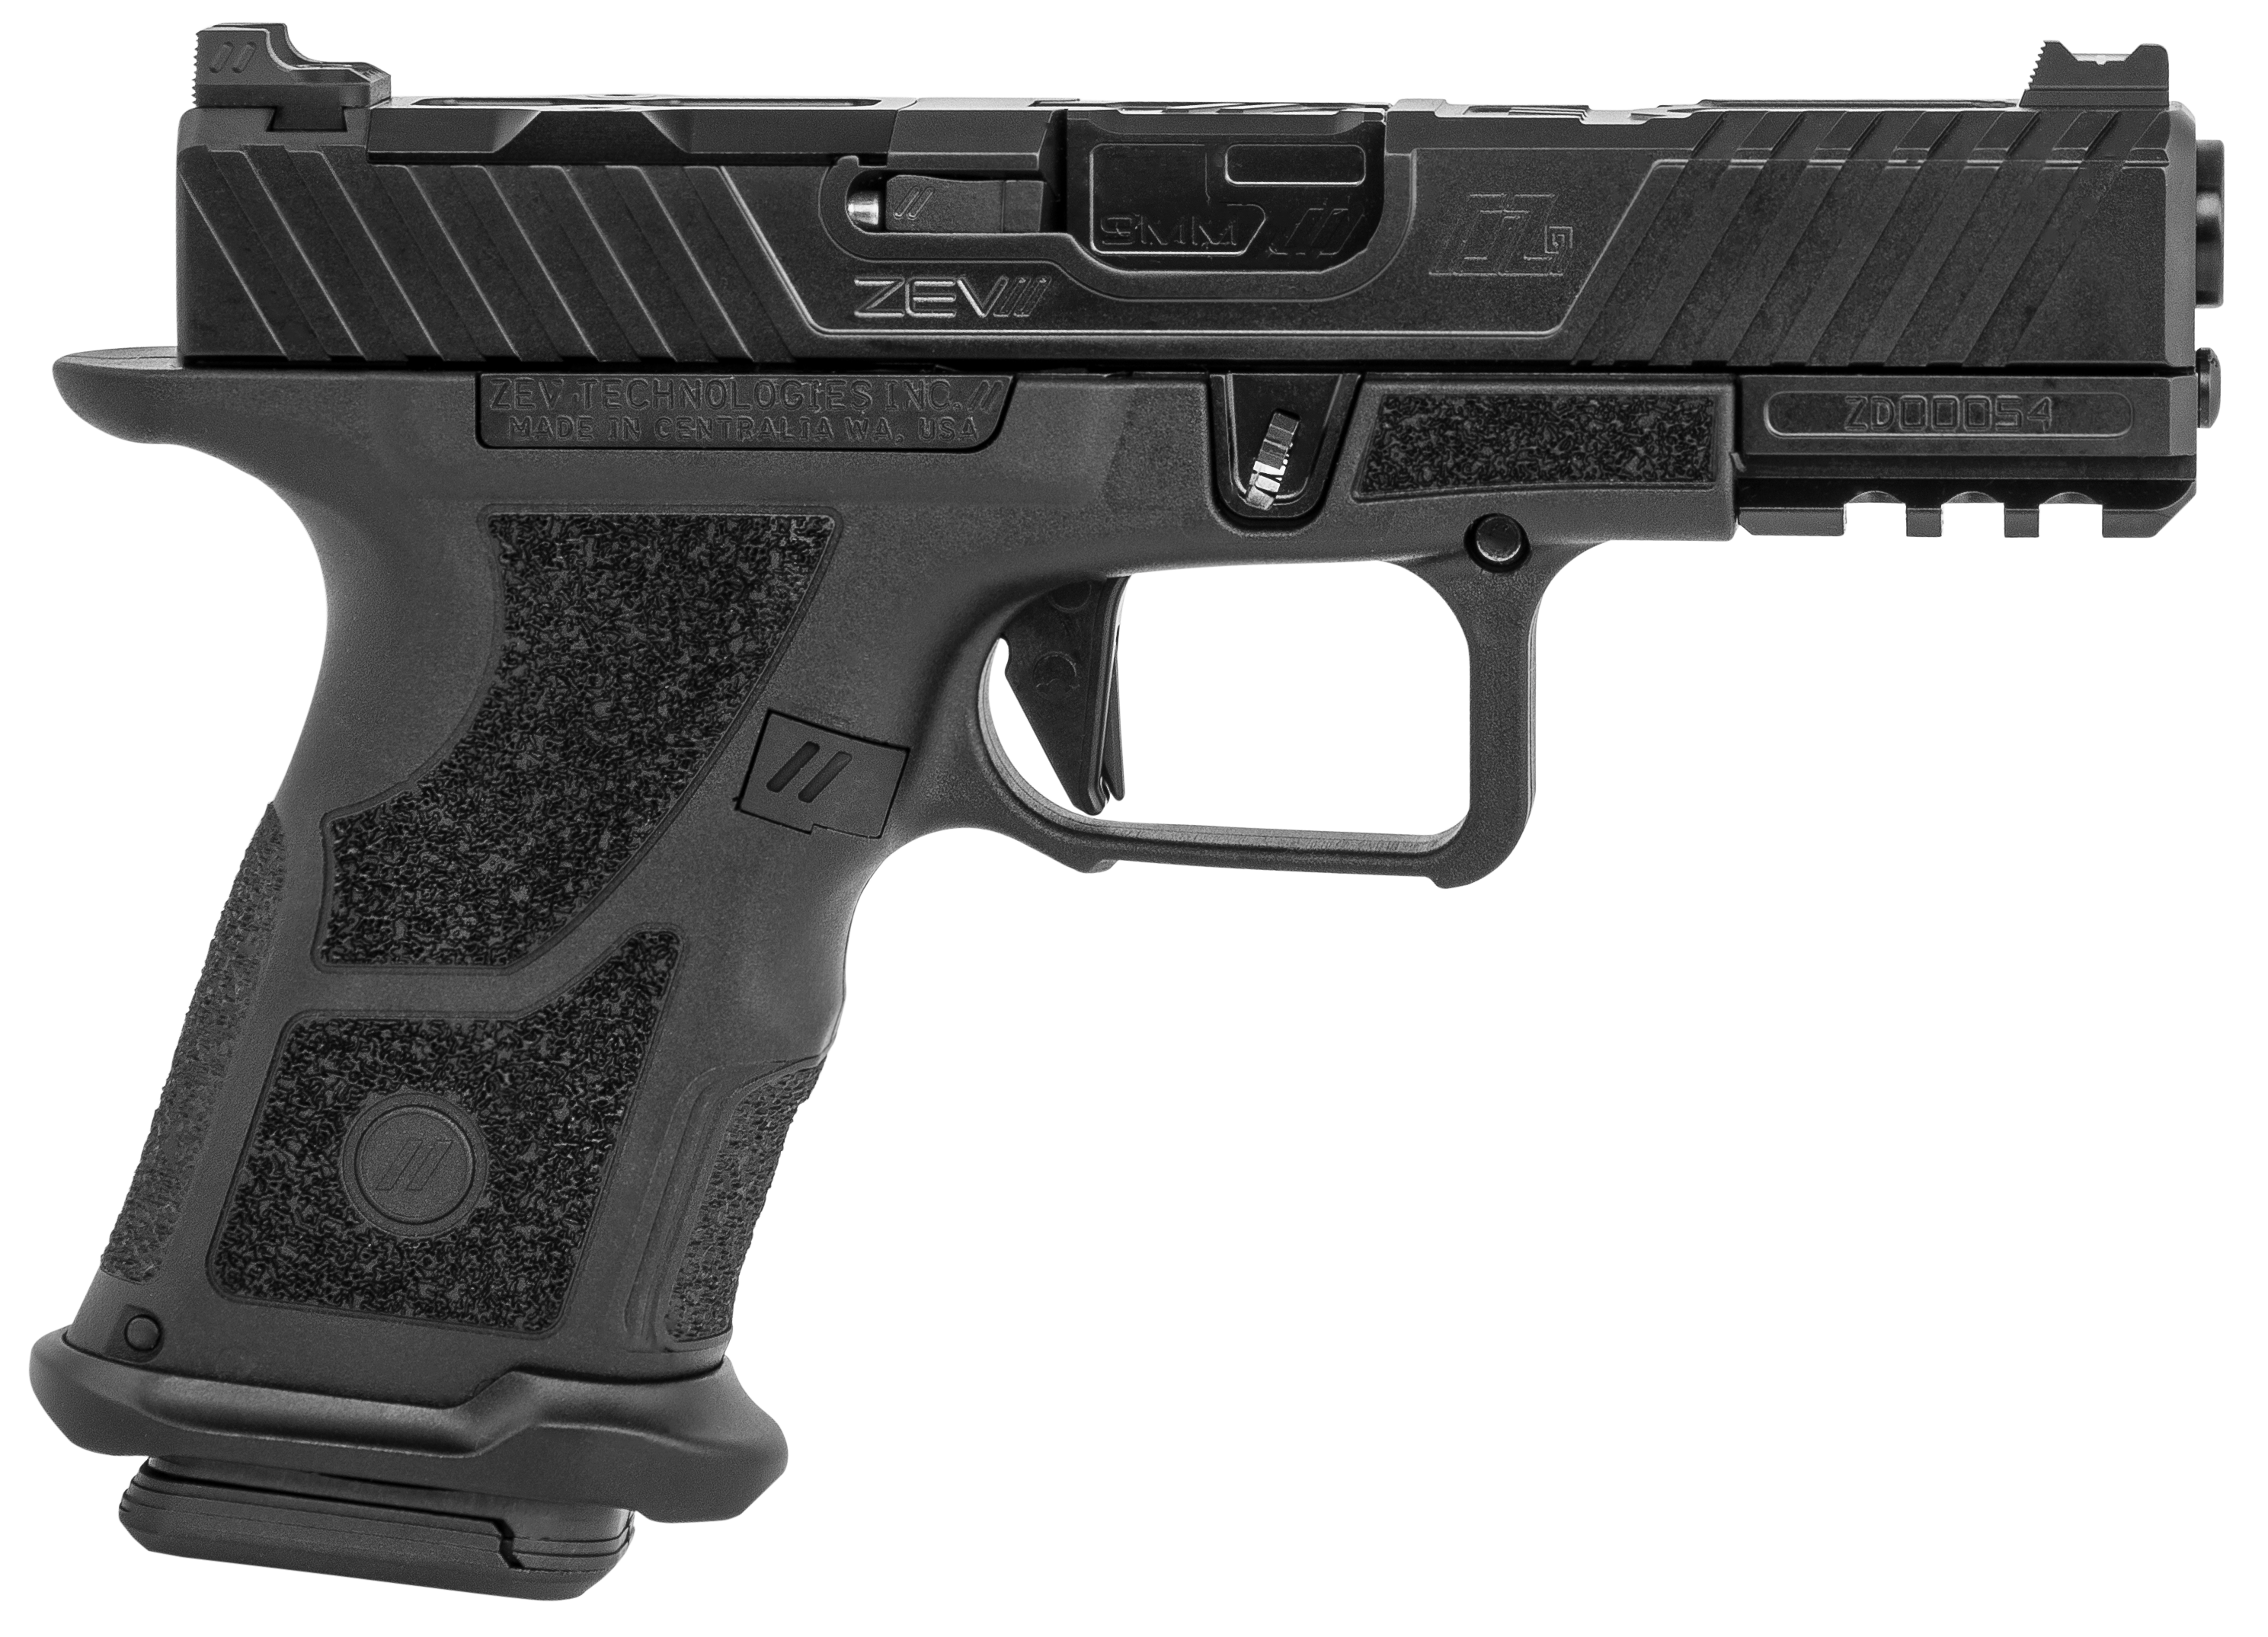 ZEV OZ9 Compact Pistol - 9mm 19+1 - Black